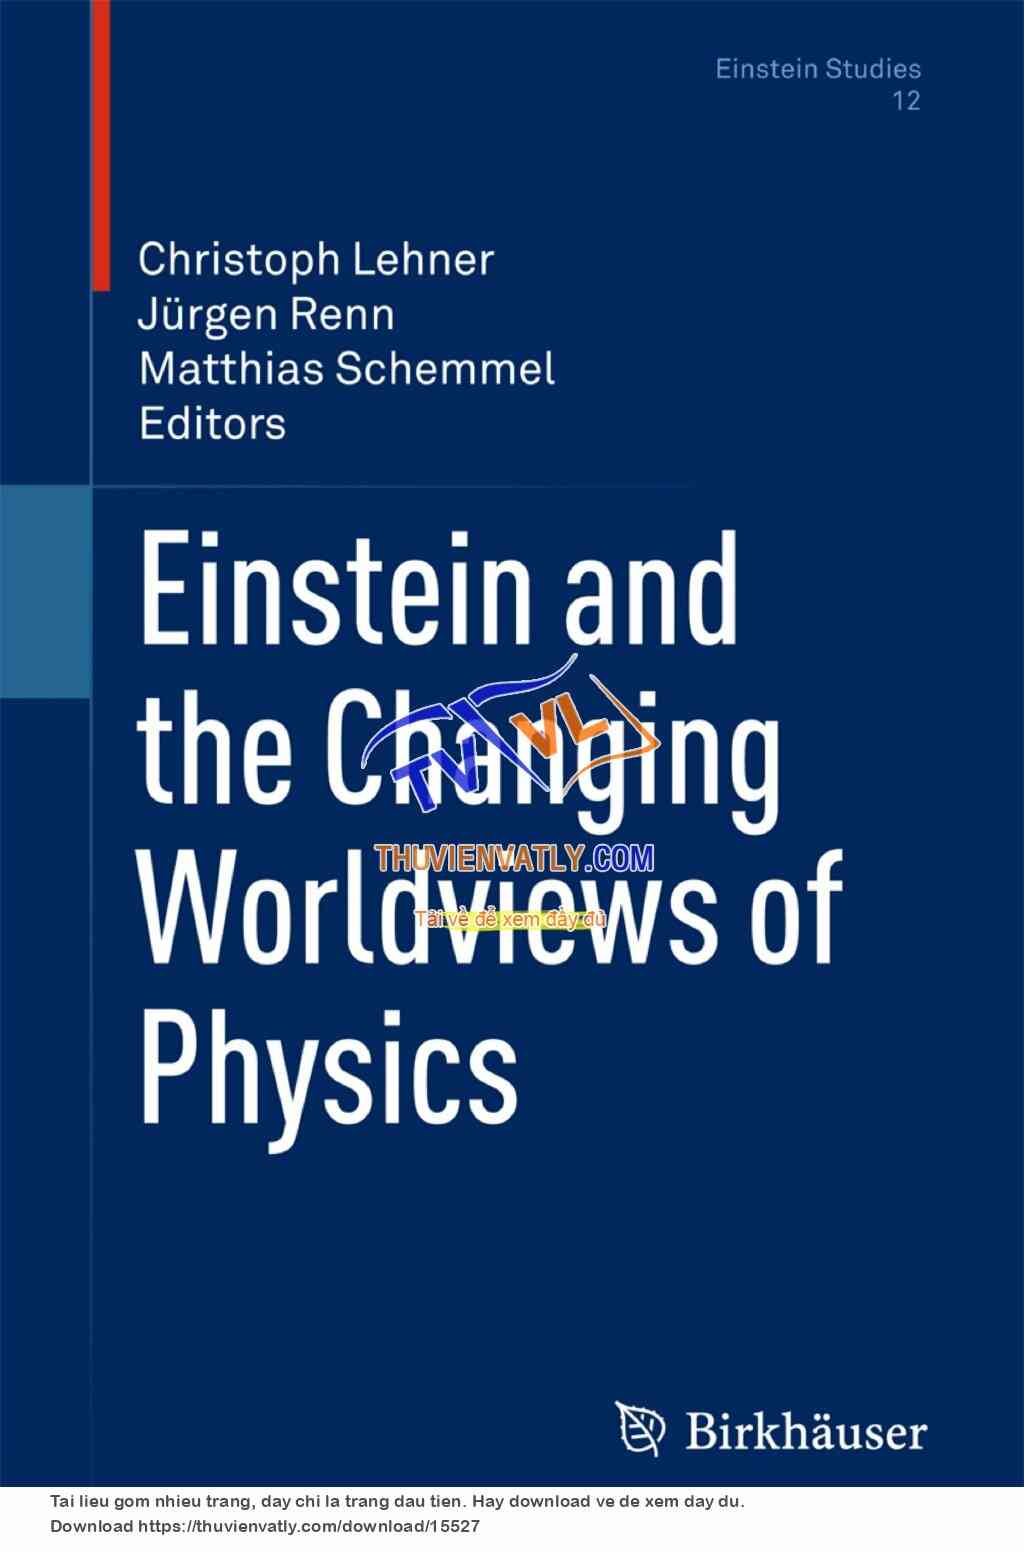 Einstein and the Changing Worldviews of Physics - C. Lehner, et. al., (Birkhauser, 2012)